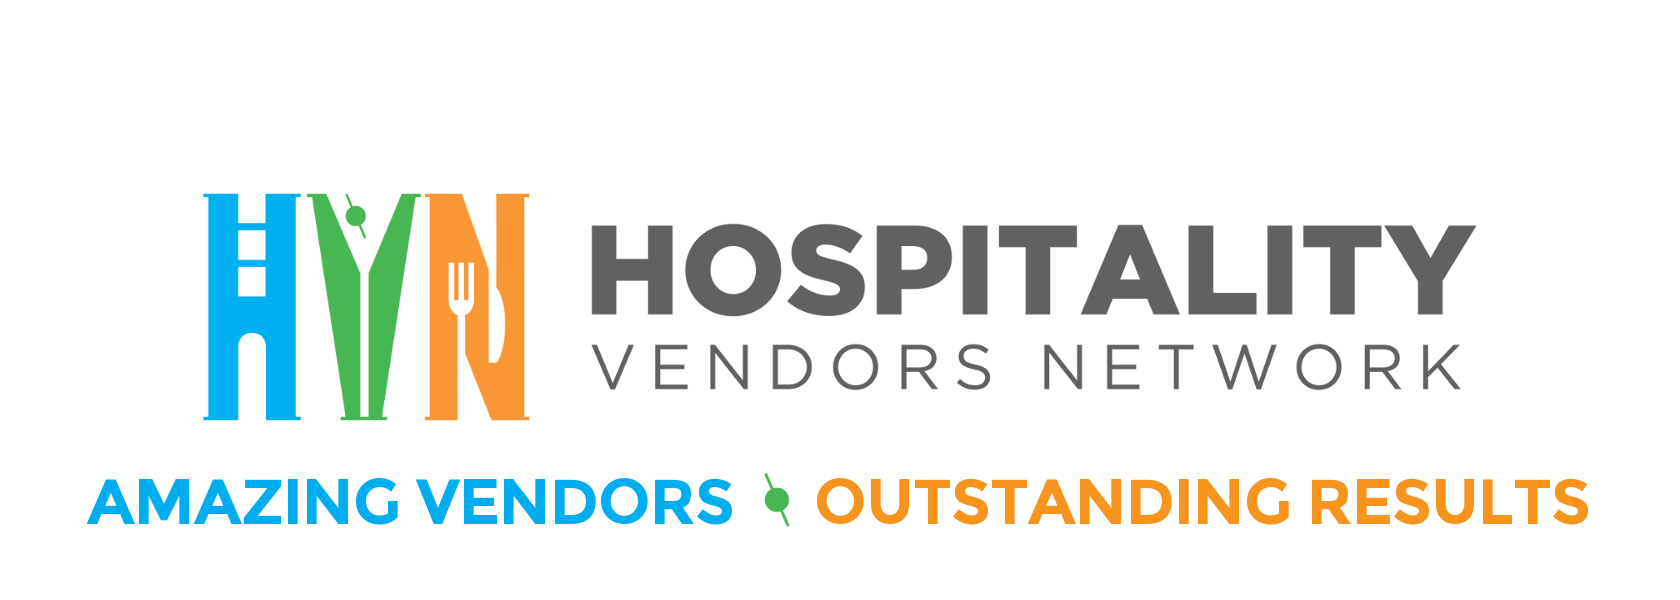 Hospitality Vendors Network